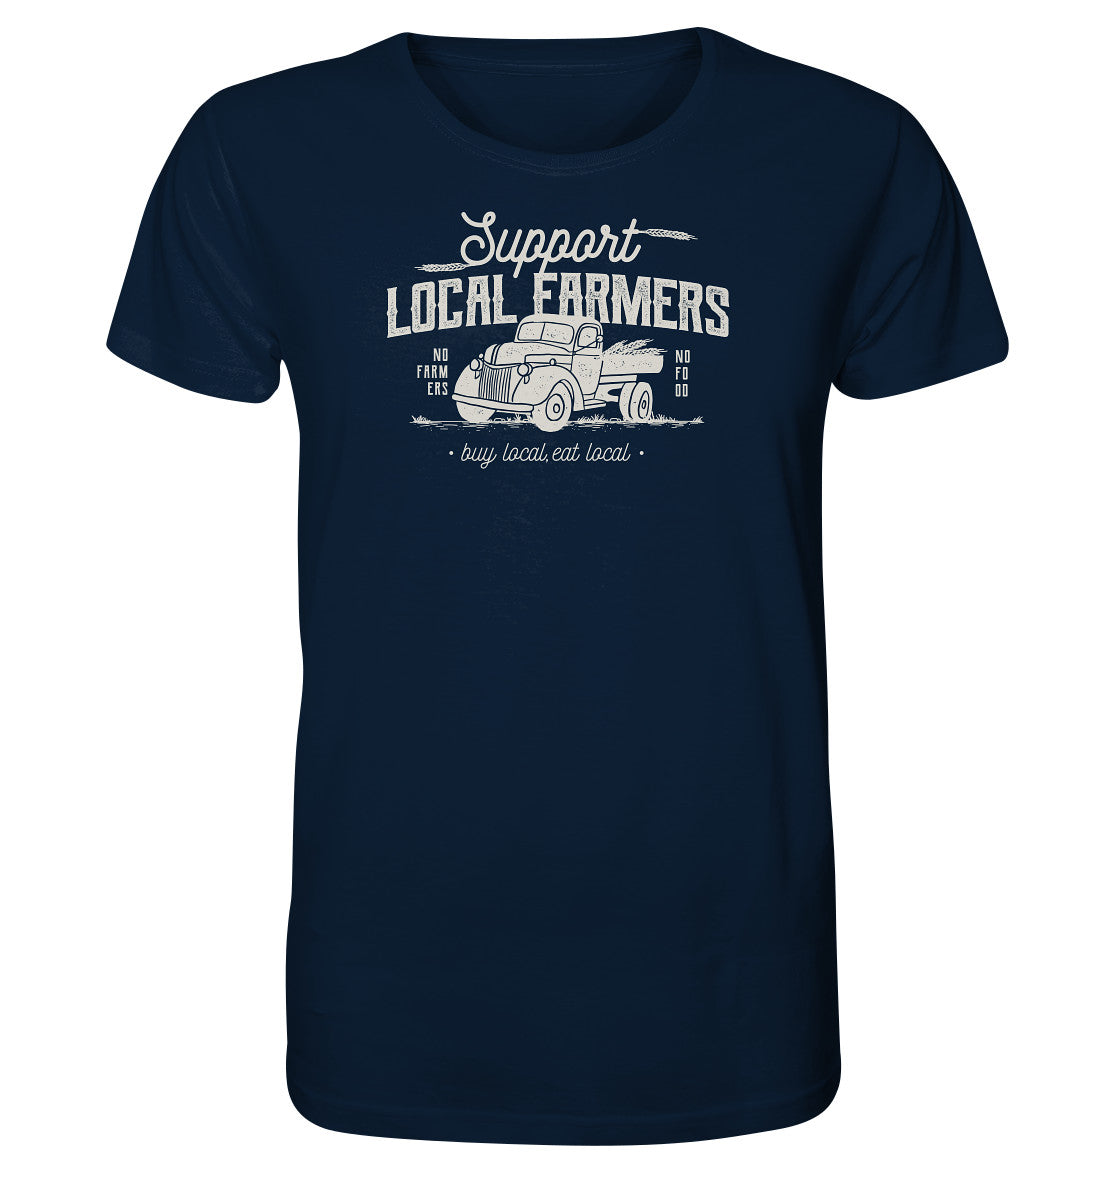 Support local farmer. No farmers no food. Shirt Landwirtschaft. Dorfkram® blau